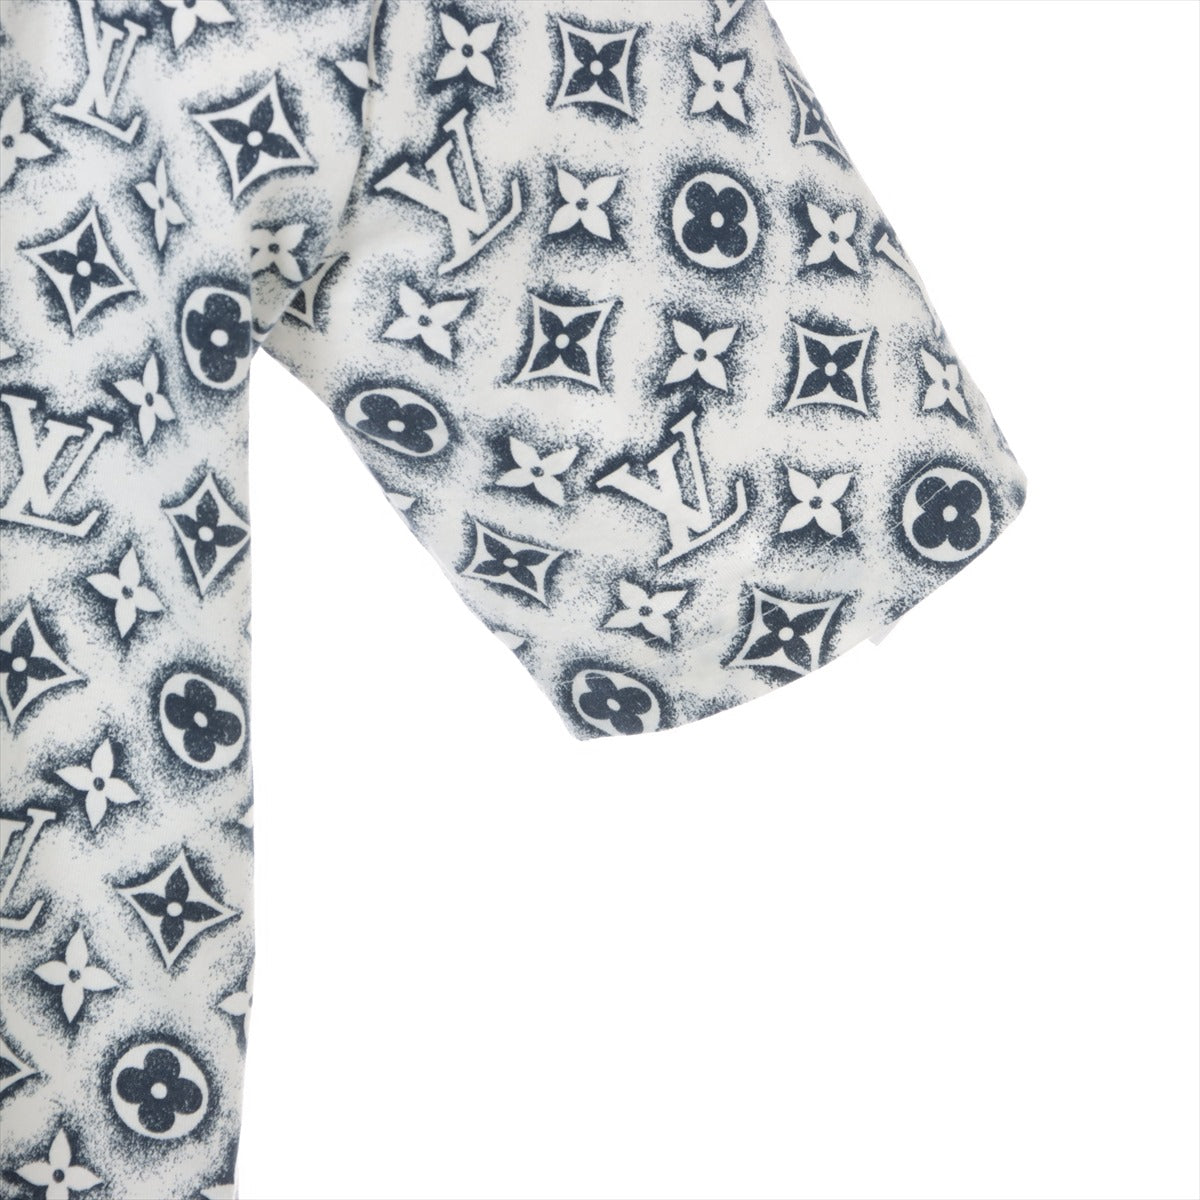 Louis Vuitton 24SS Cotton T-shirt XXL Men's White x navy  RM241MM Monogram